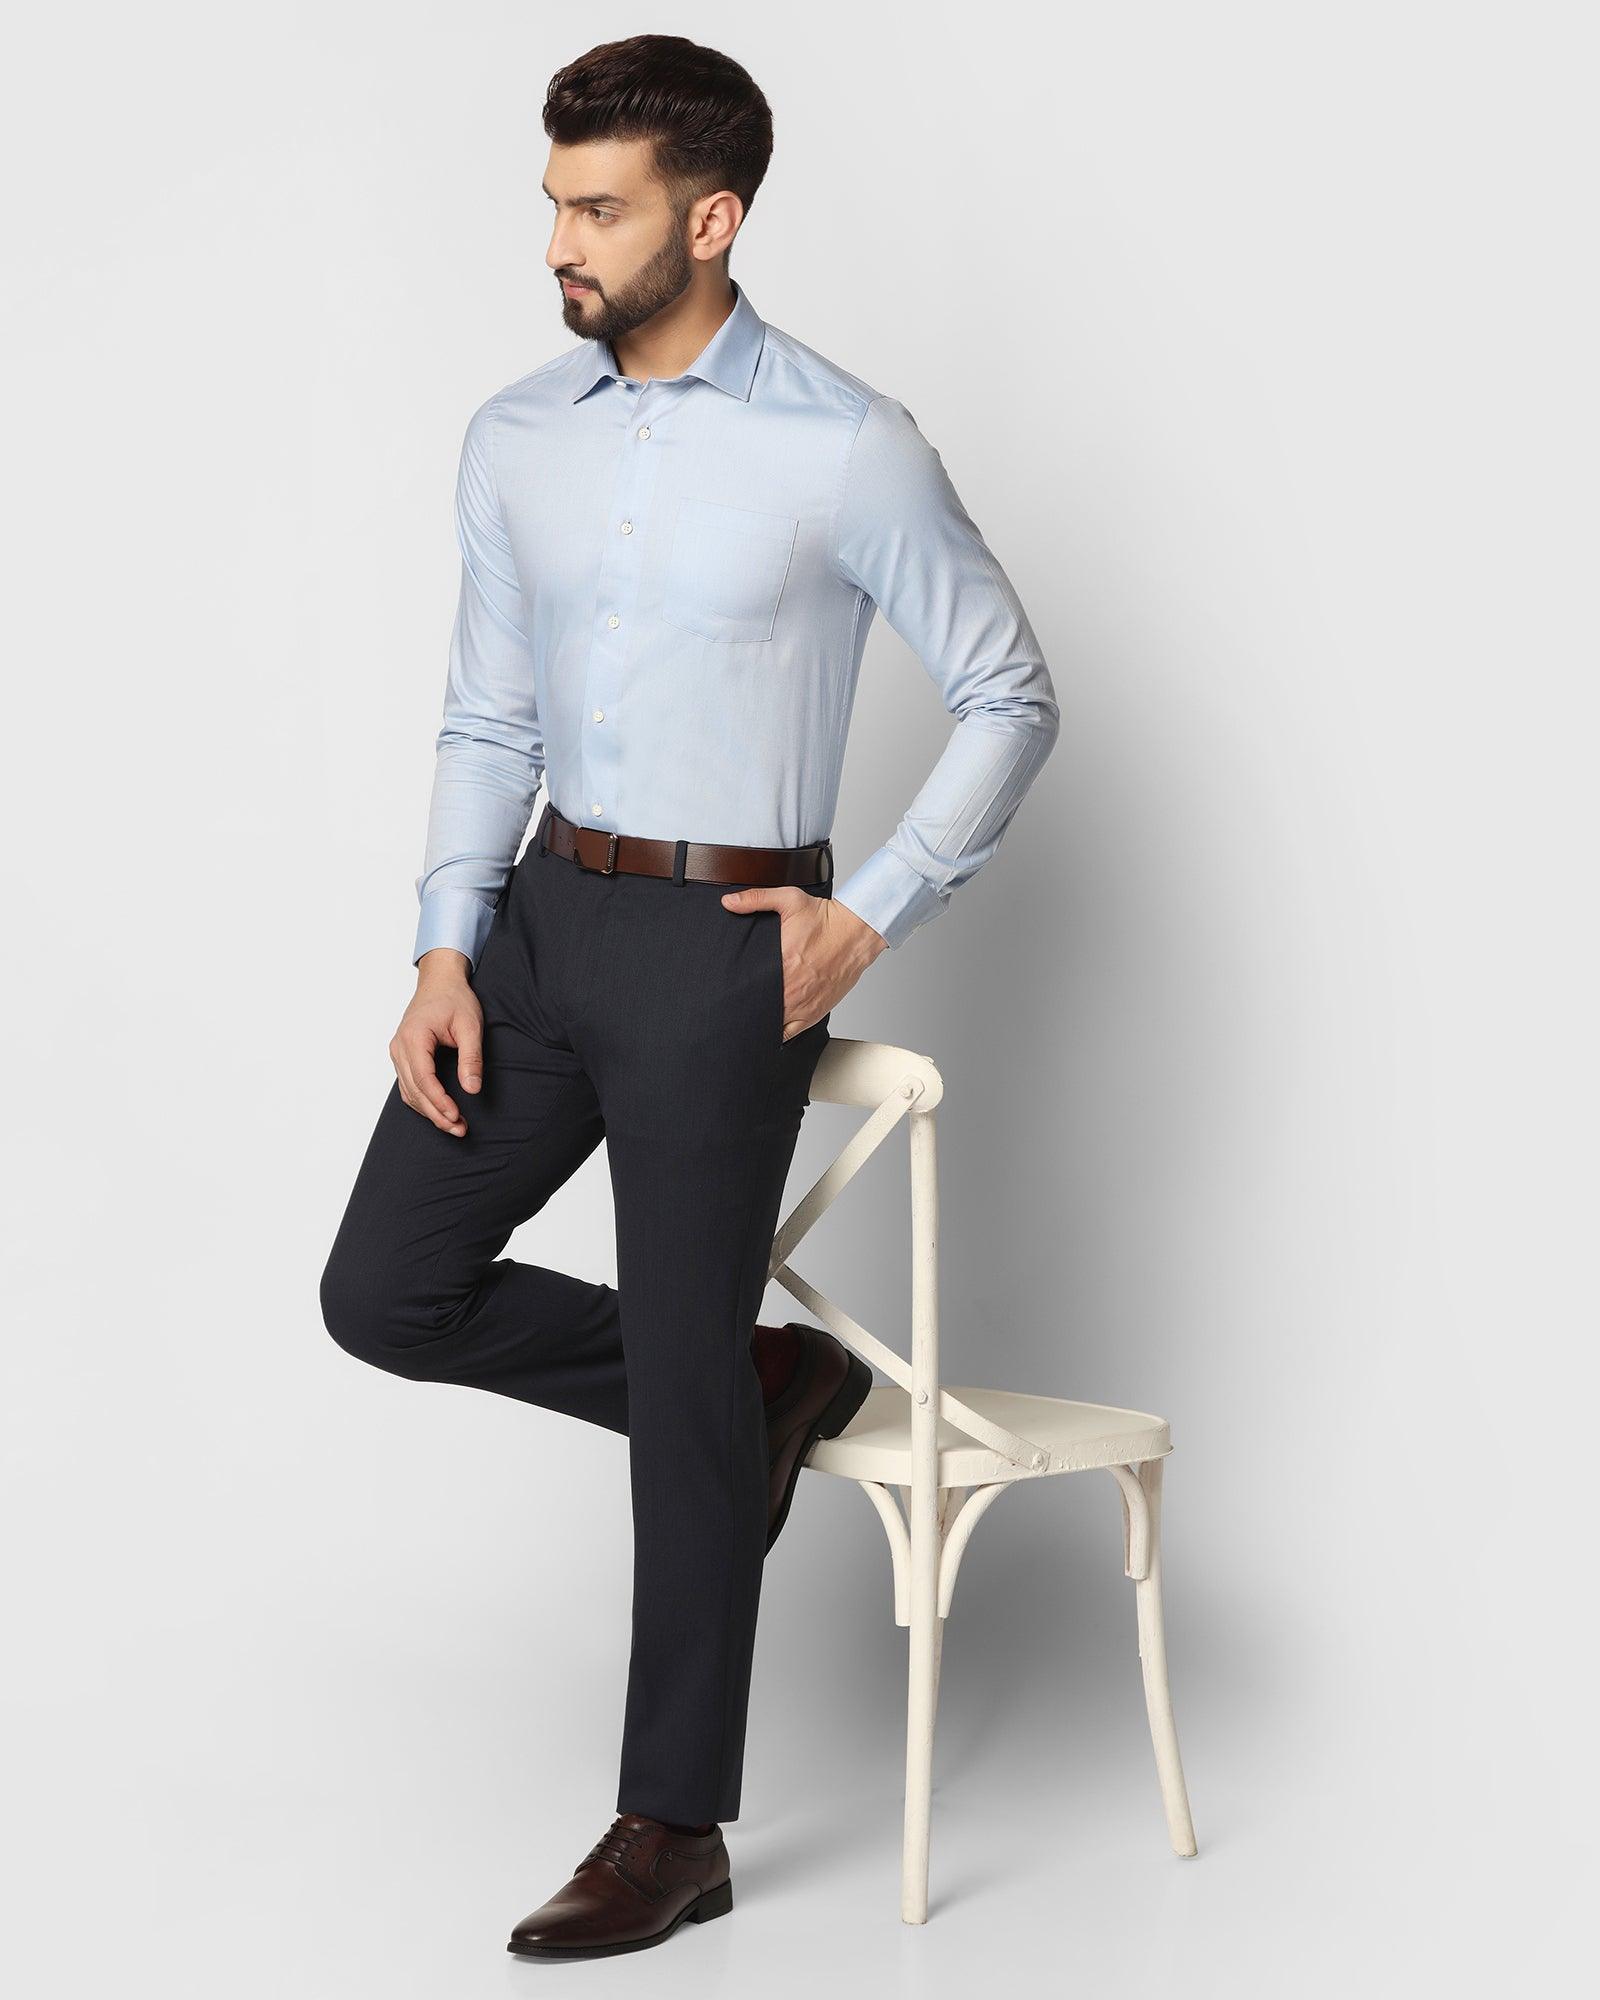 Formal Blue Textured Shirt - Bring